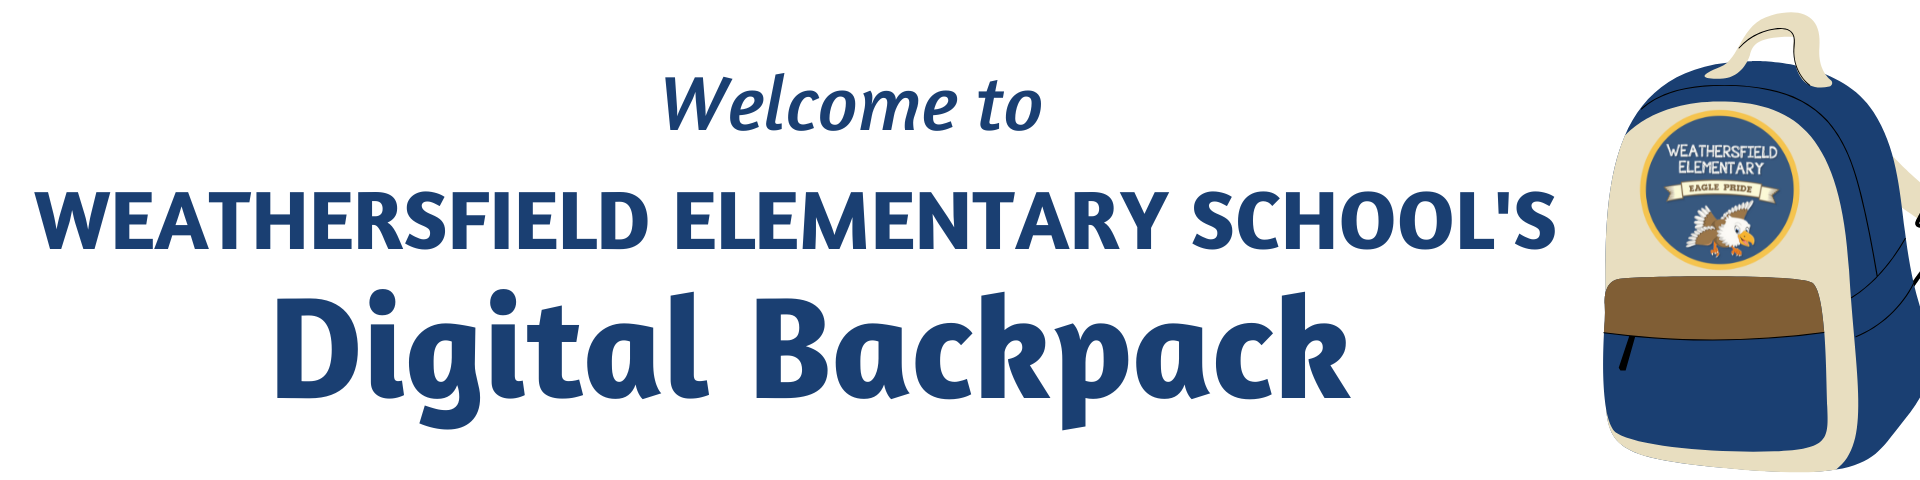 Welcome to Weathersfield Elementary School's Digital Backpack